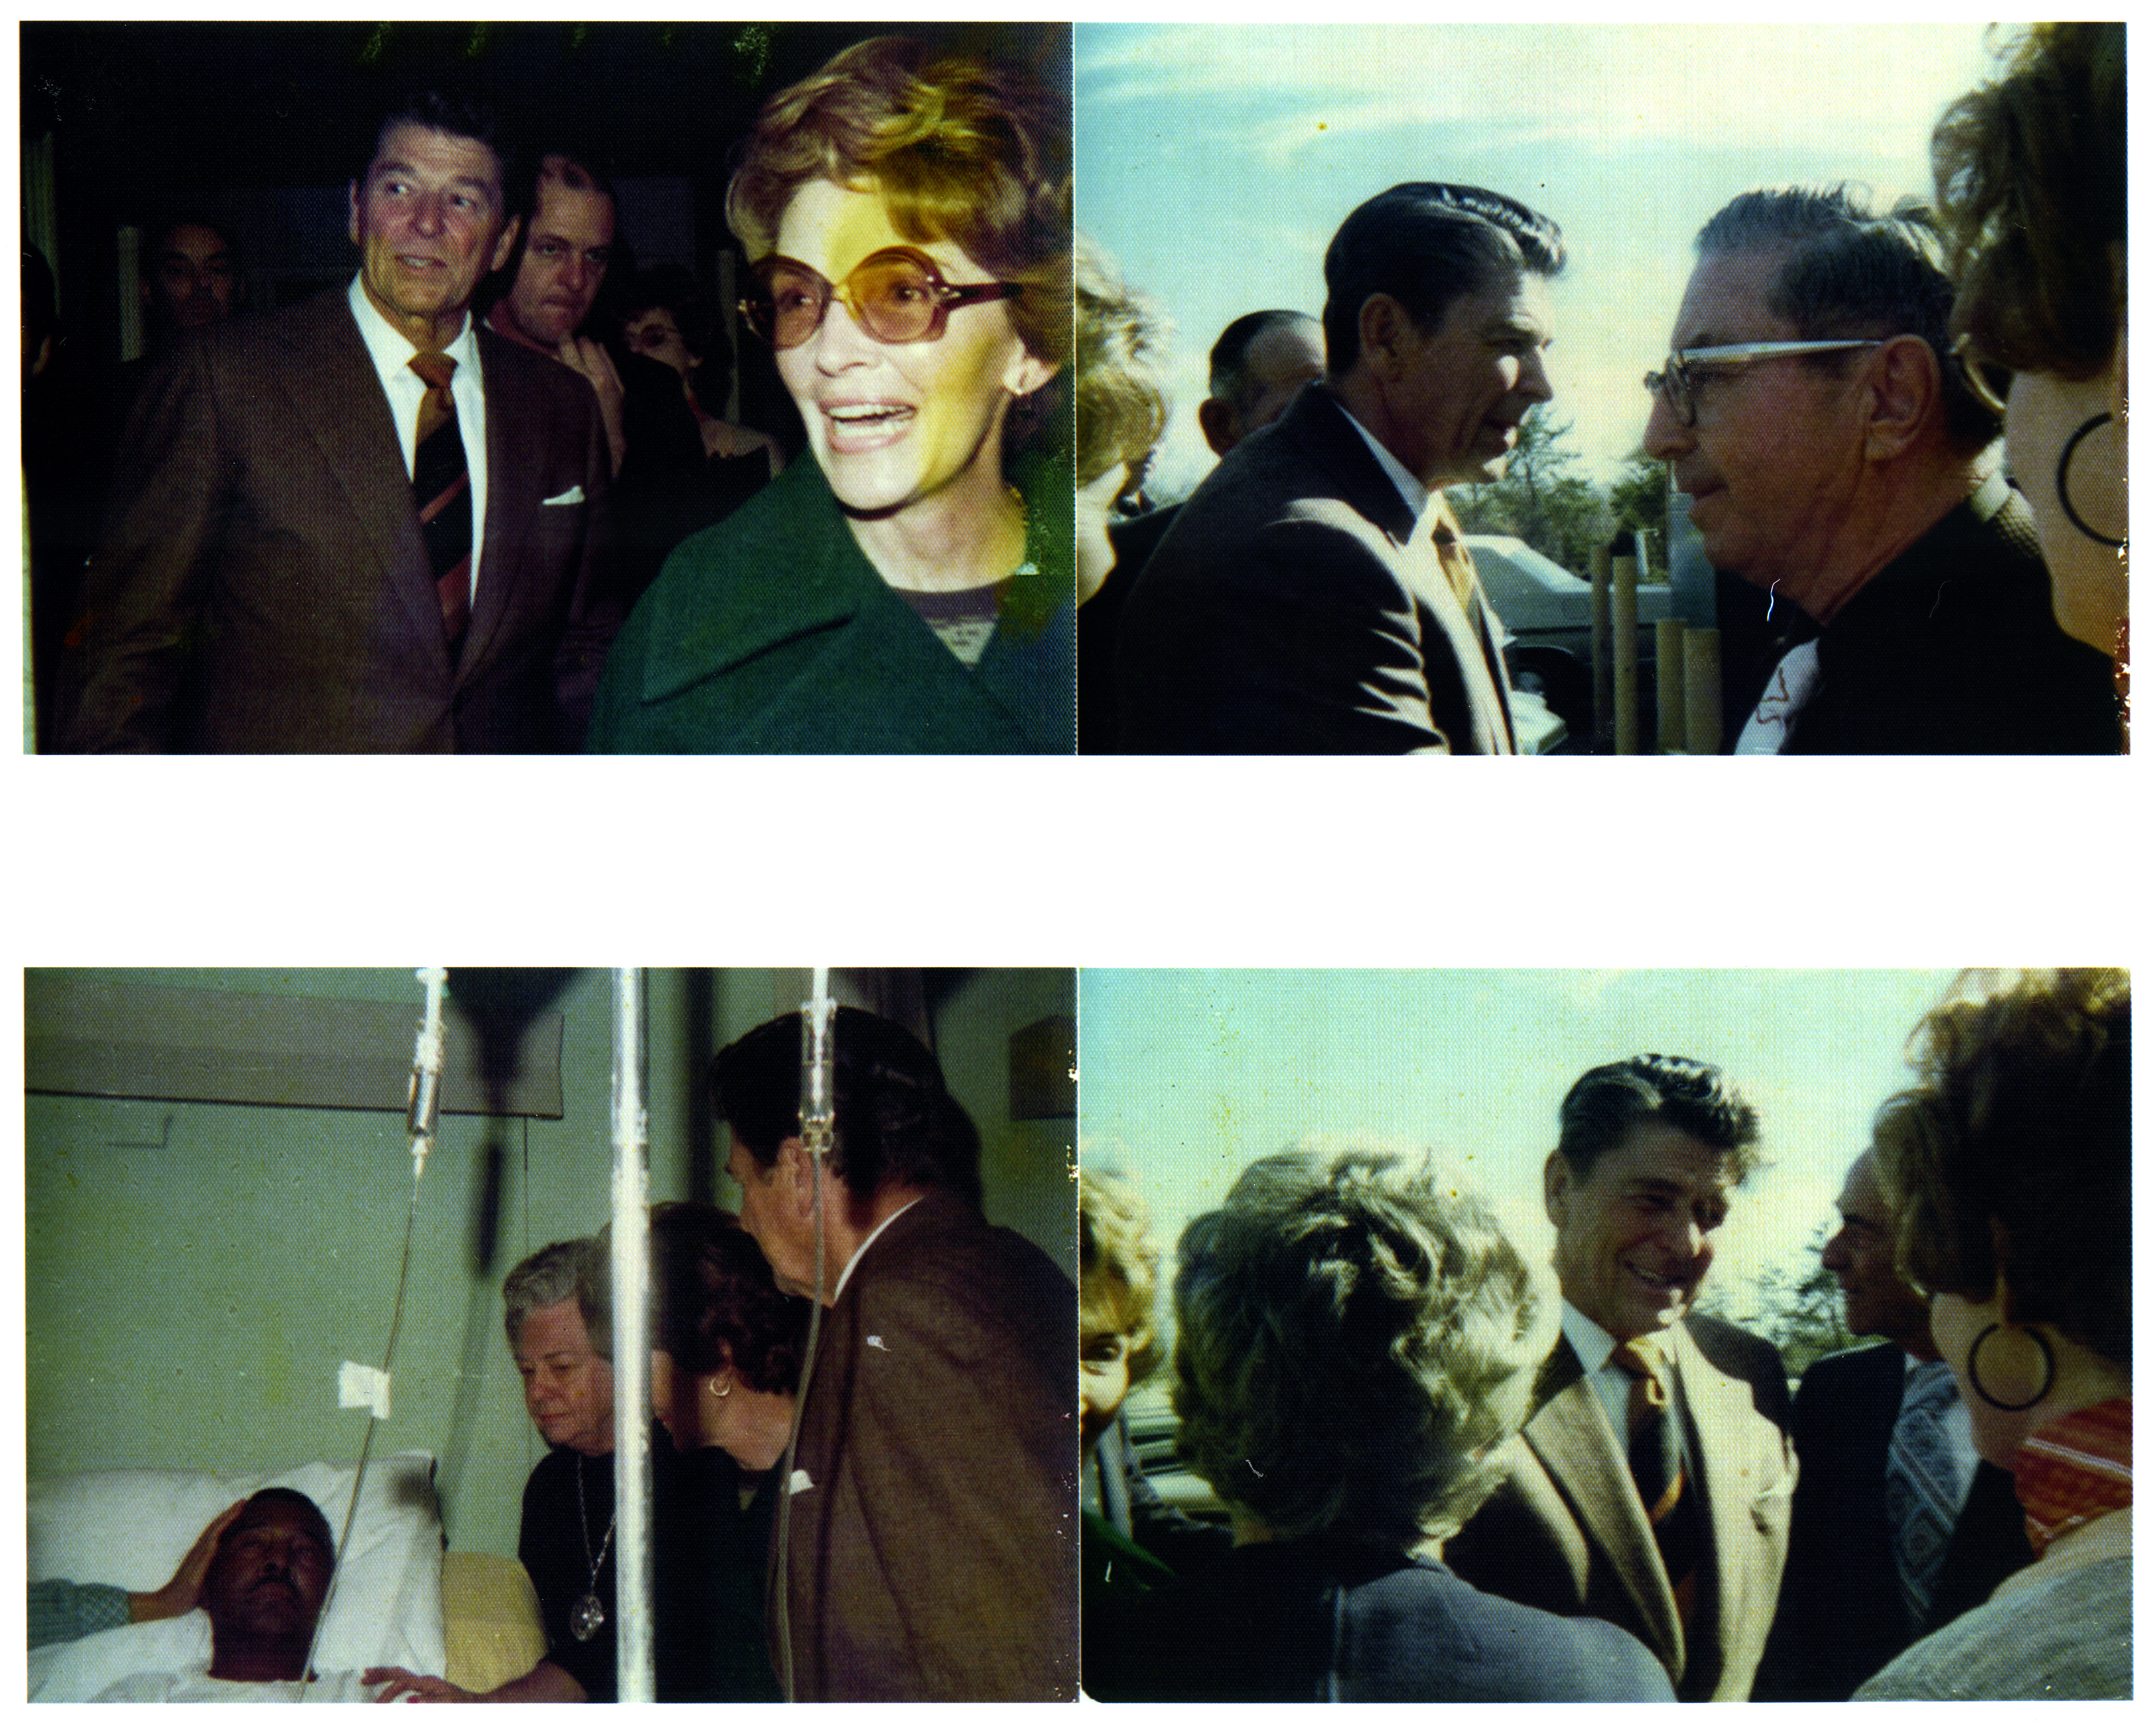 Ronald Reagan and Nancy Reagan visiting nursing home in Dixon, Illinois